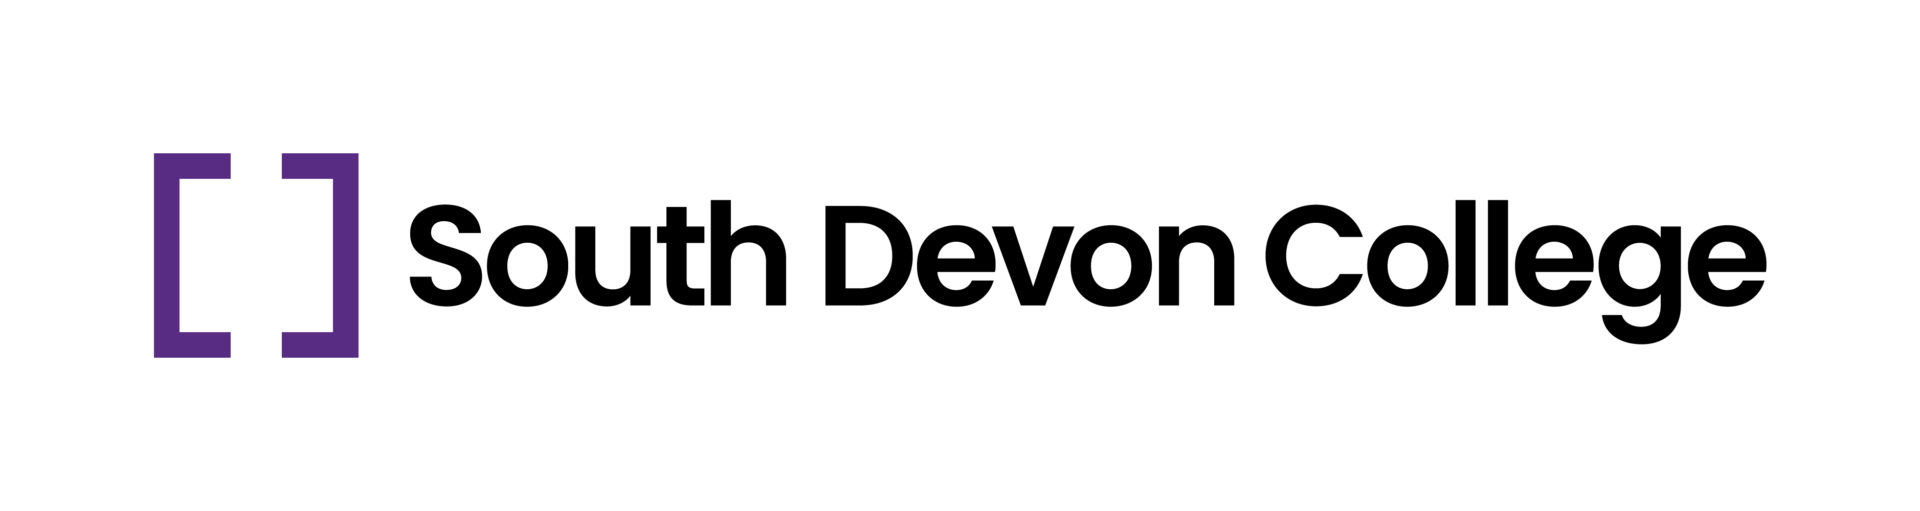 South Devon College